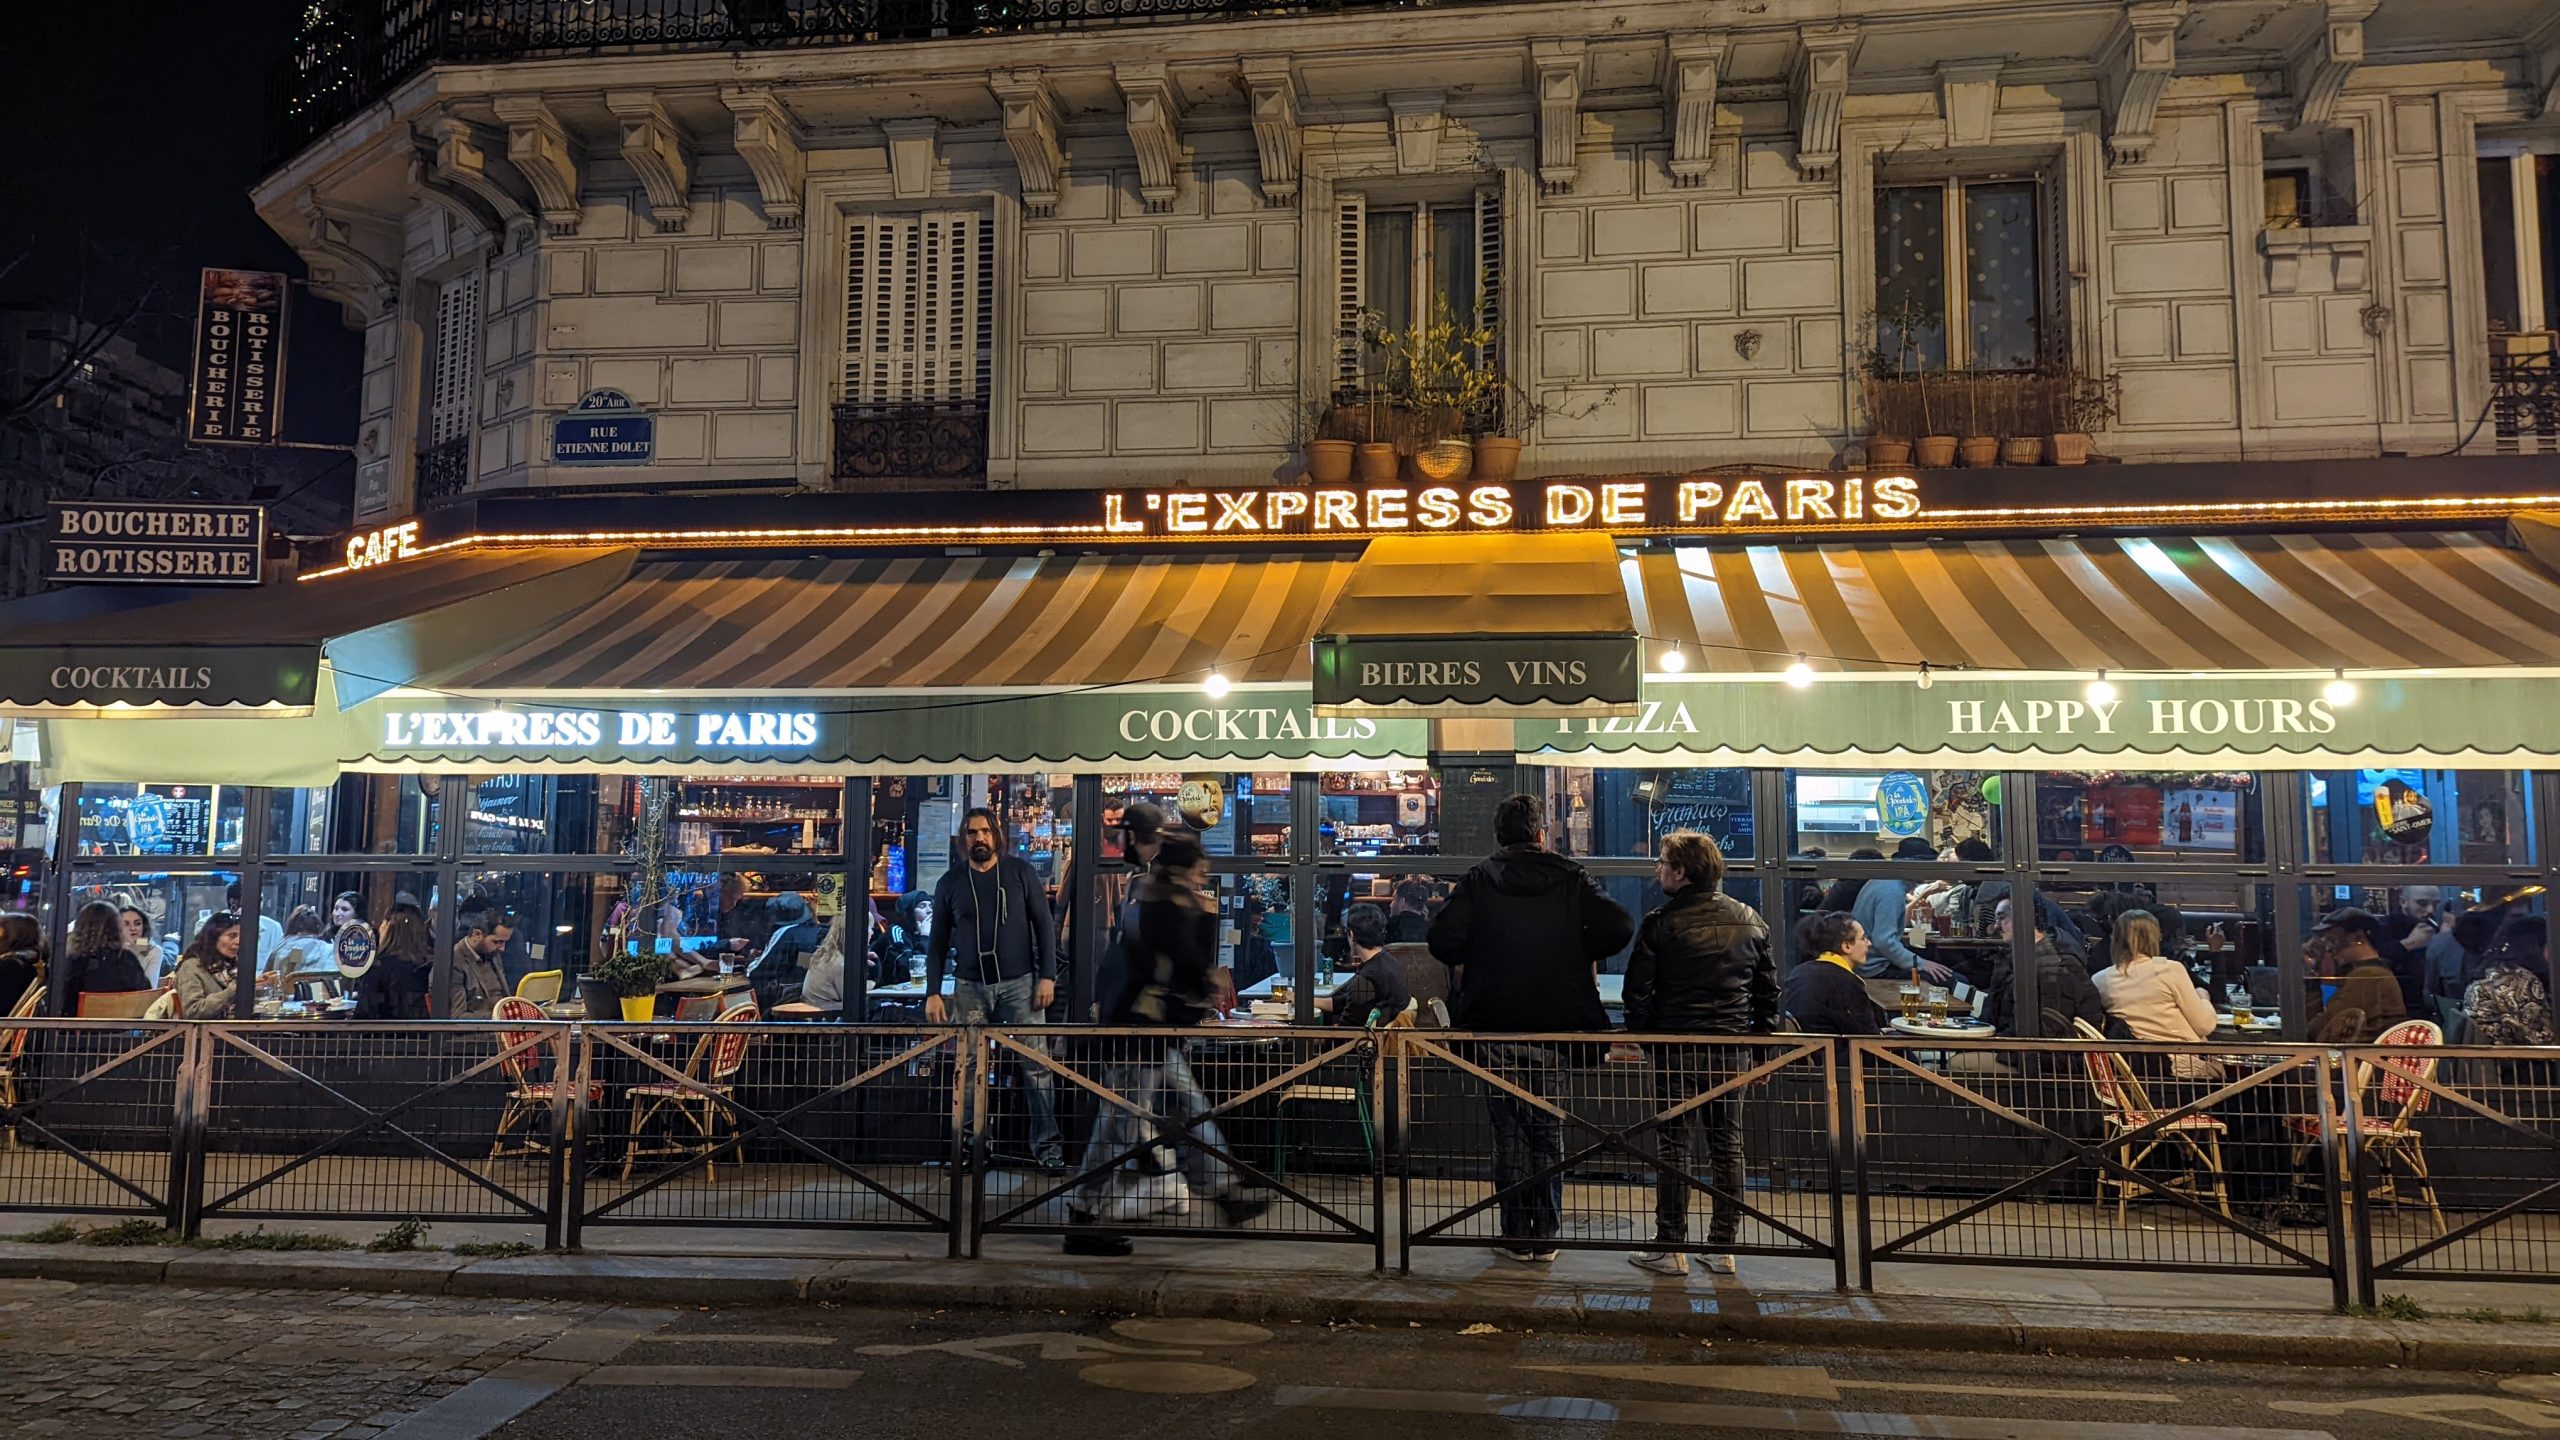 L'Express de Paris, by night ;)